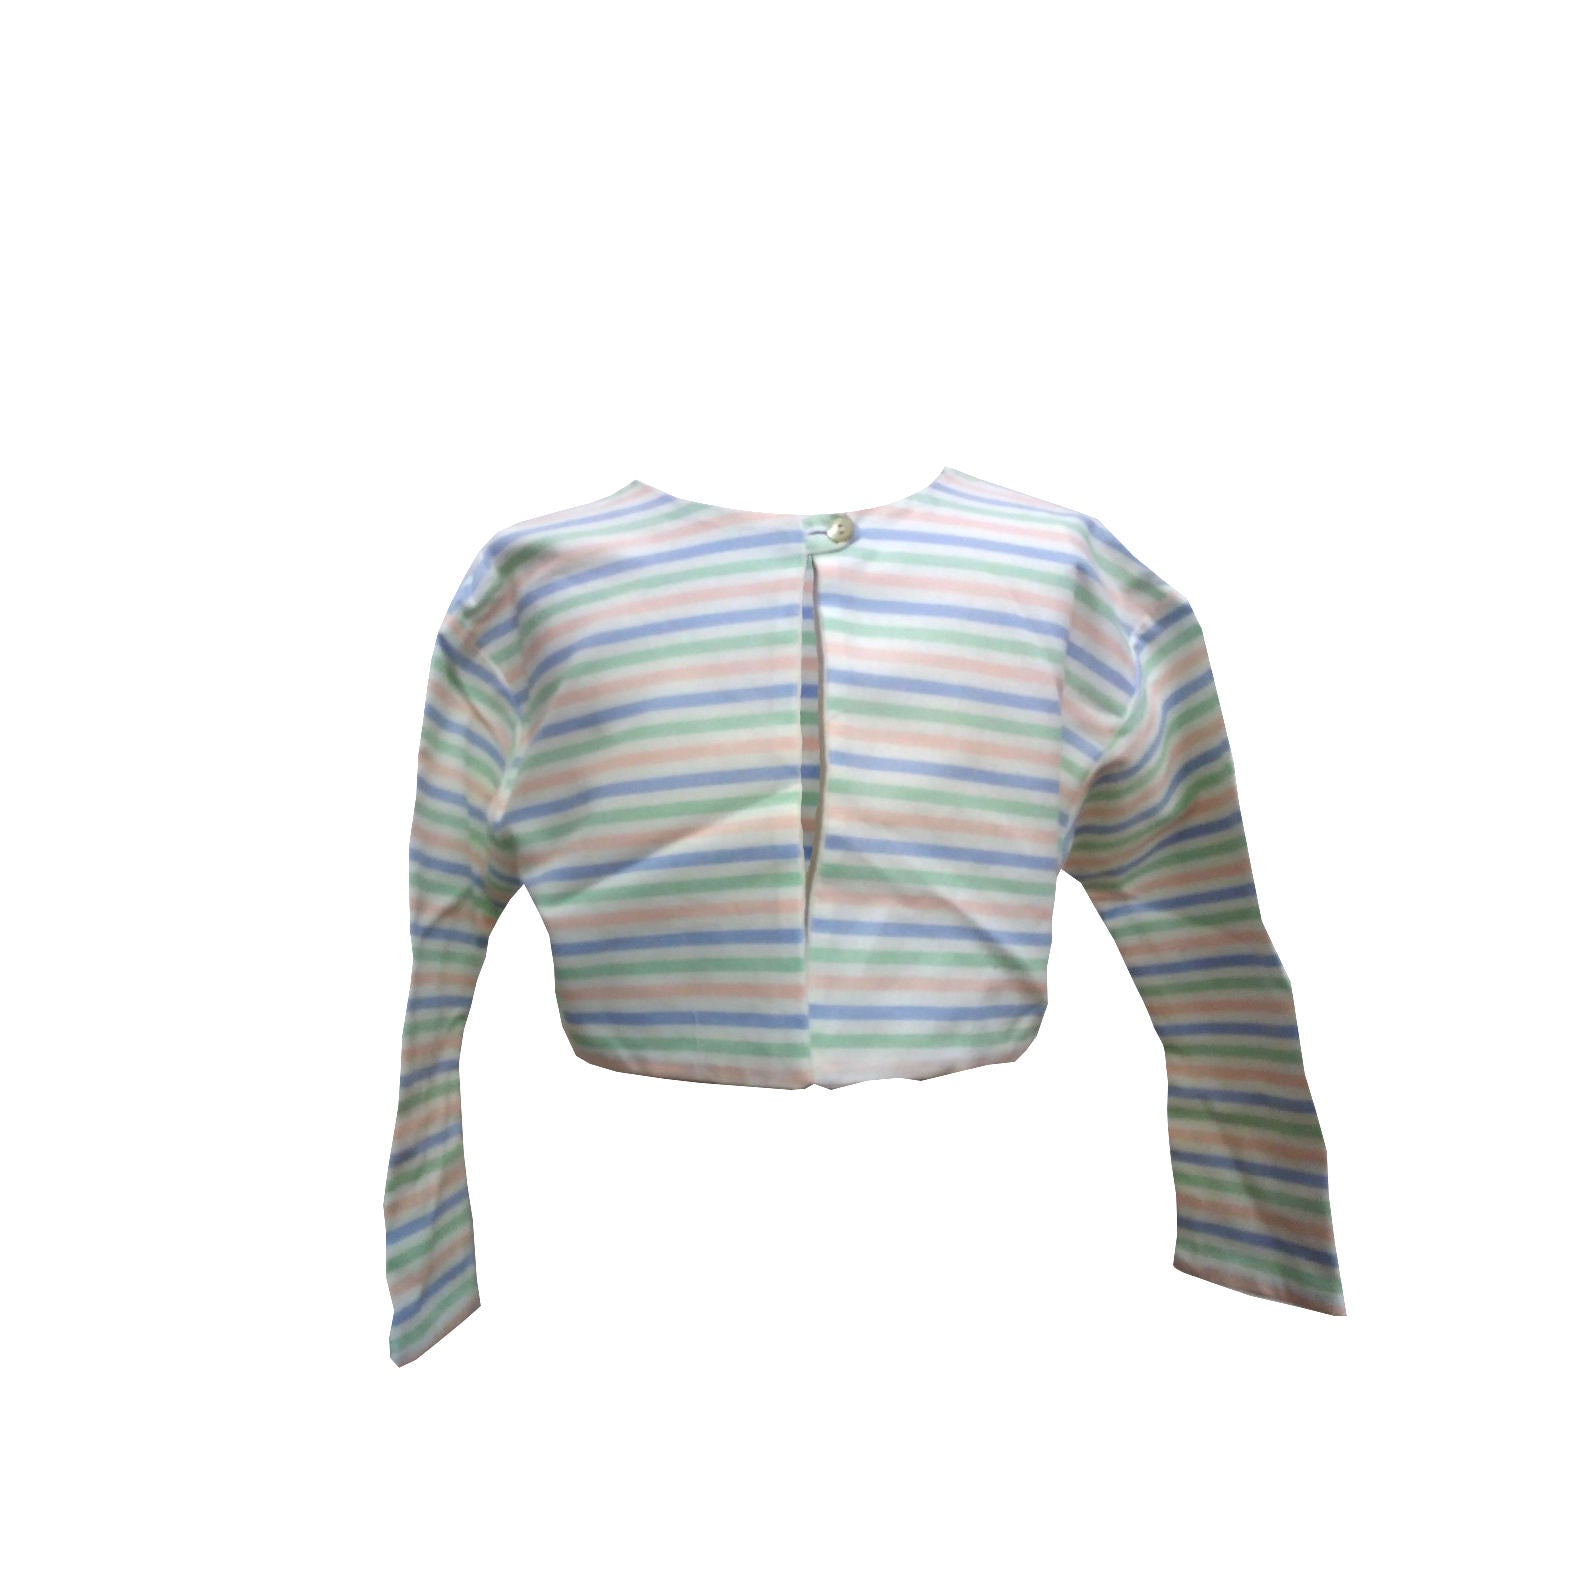 Archive Jacket - Pastel stripe reversible